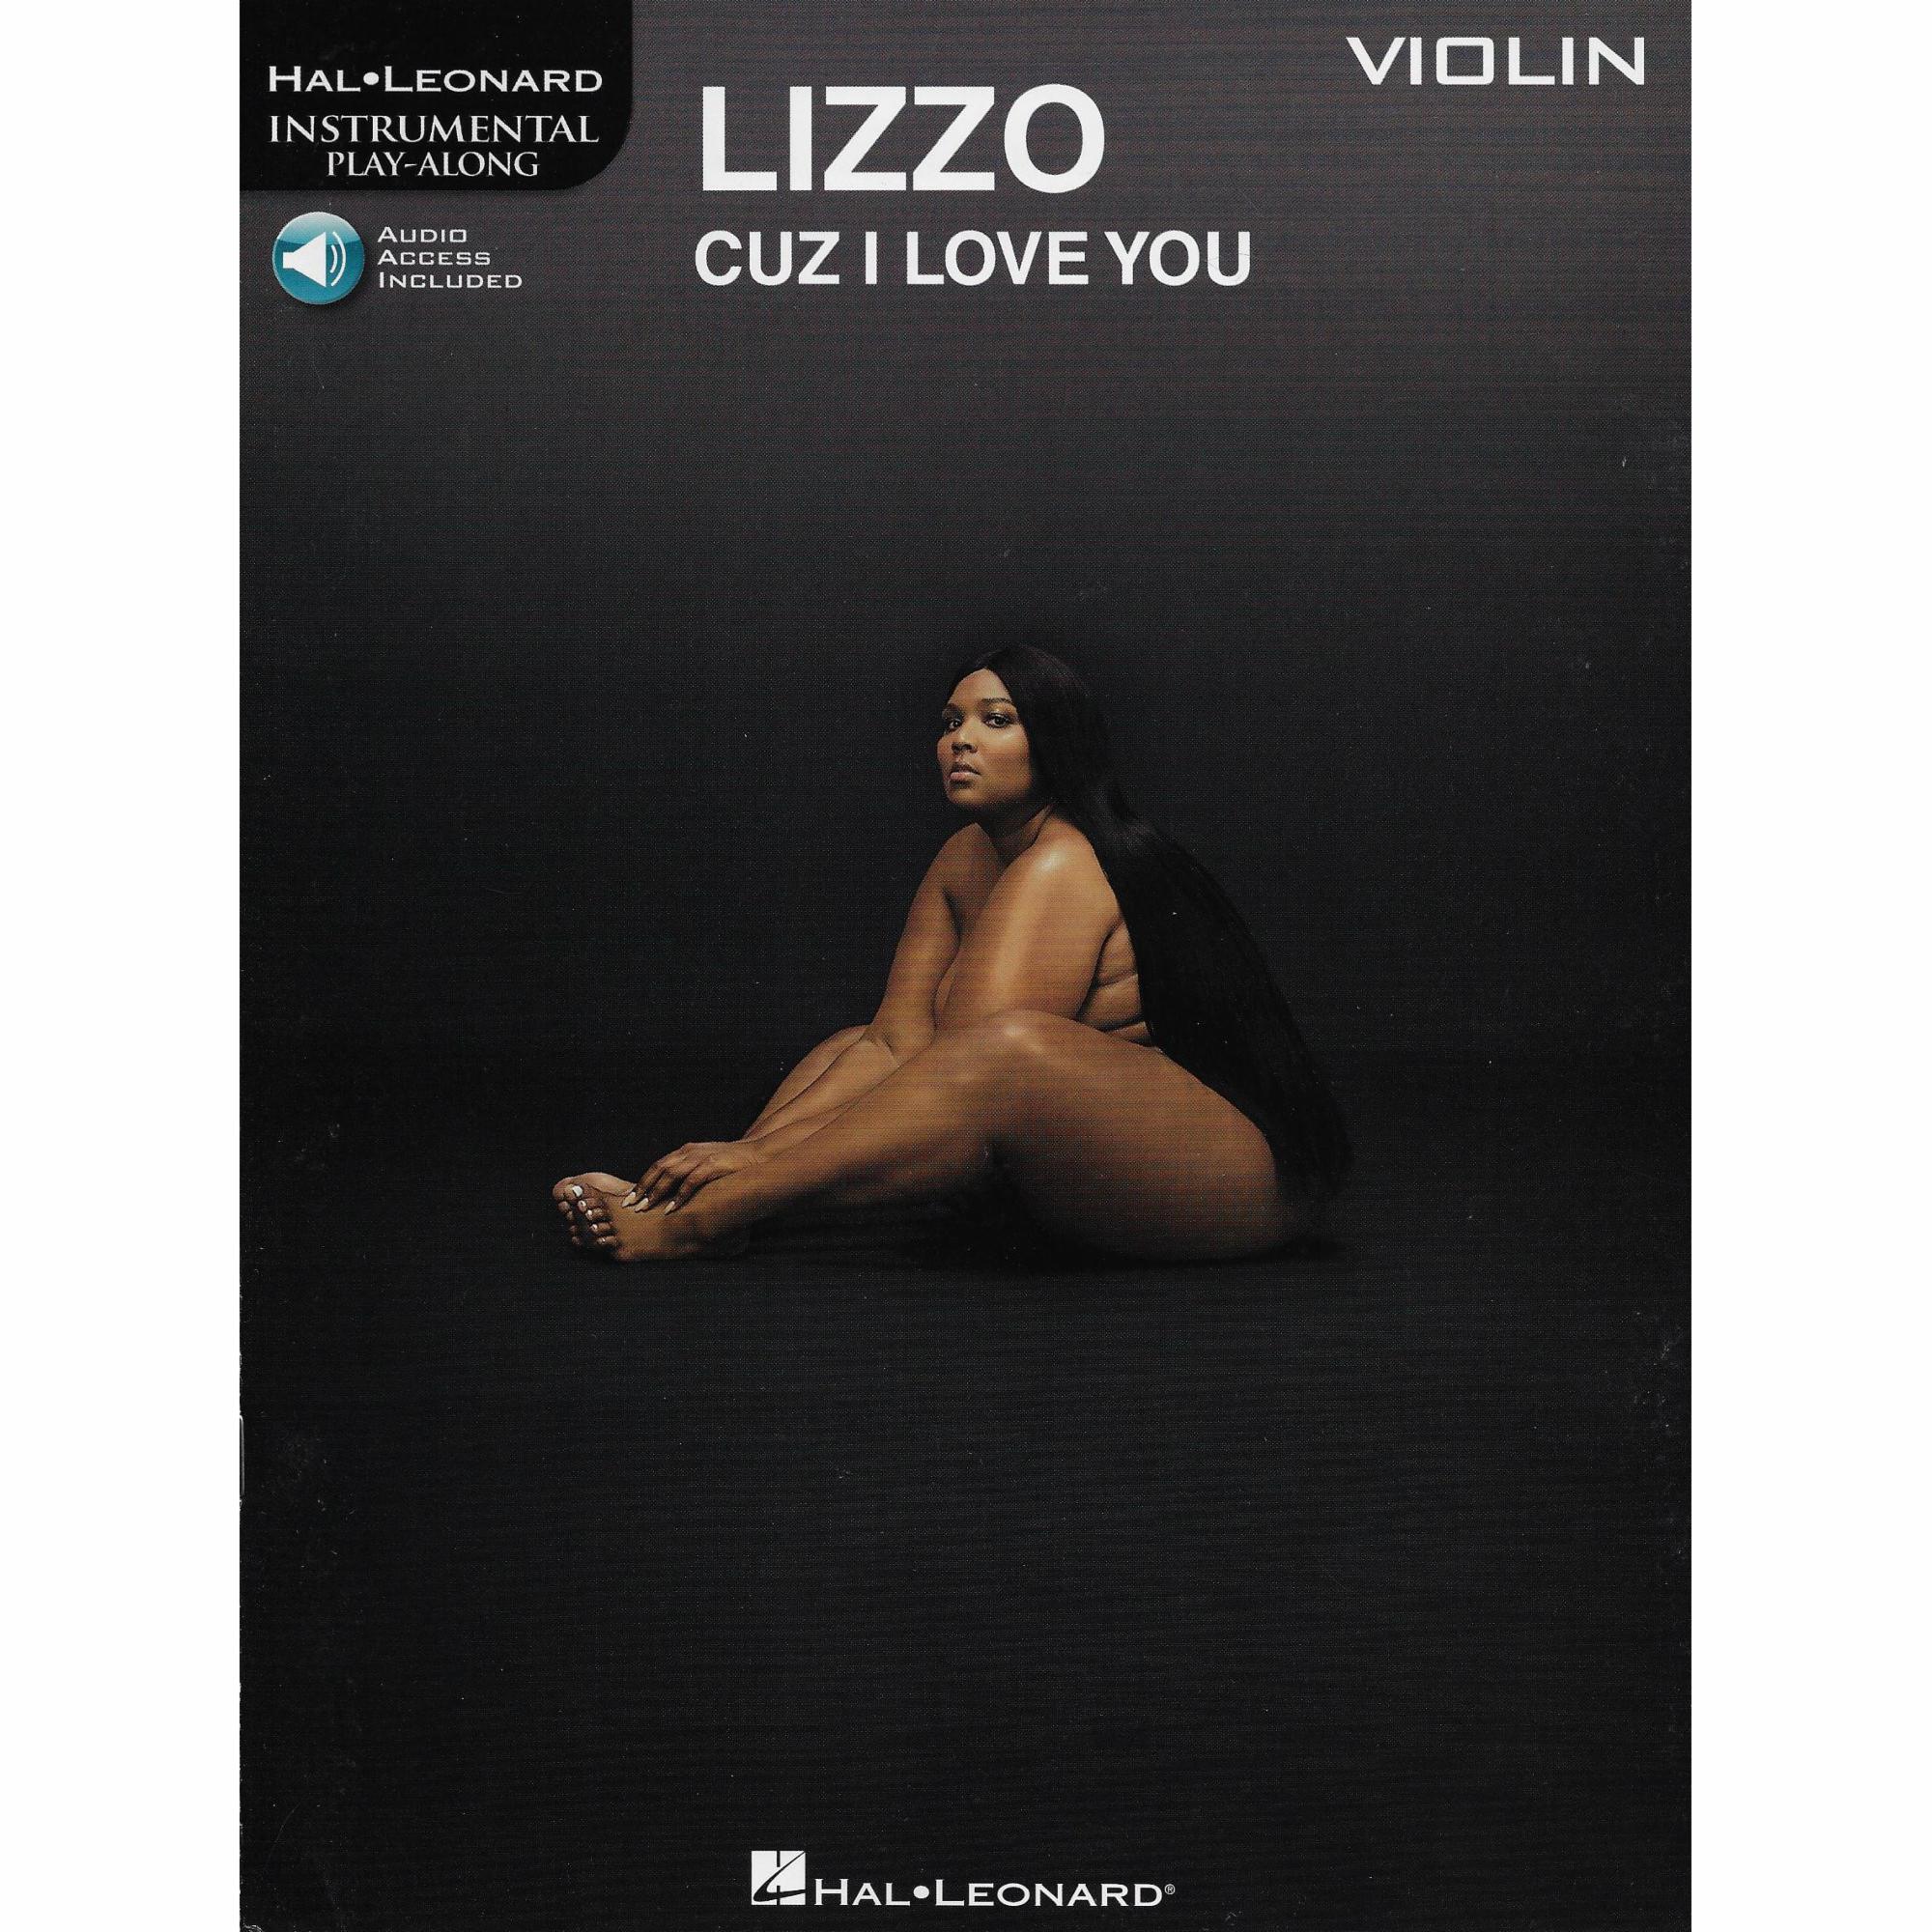 Lizzo: Cuz I Love You for Violin